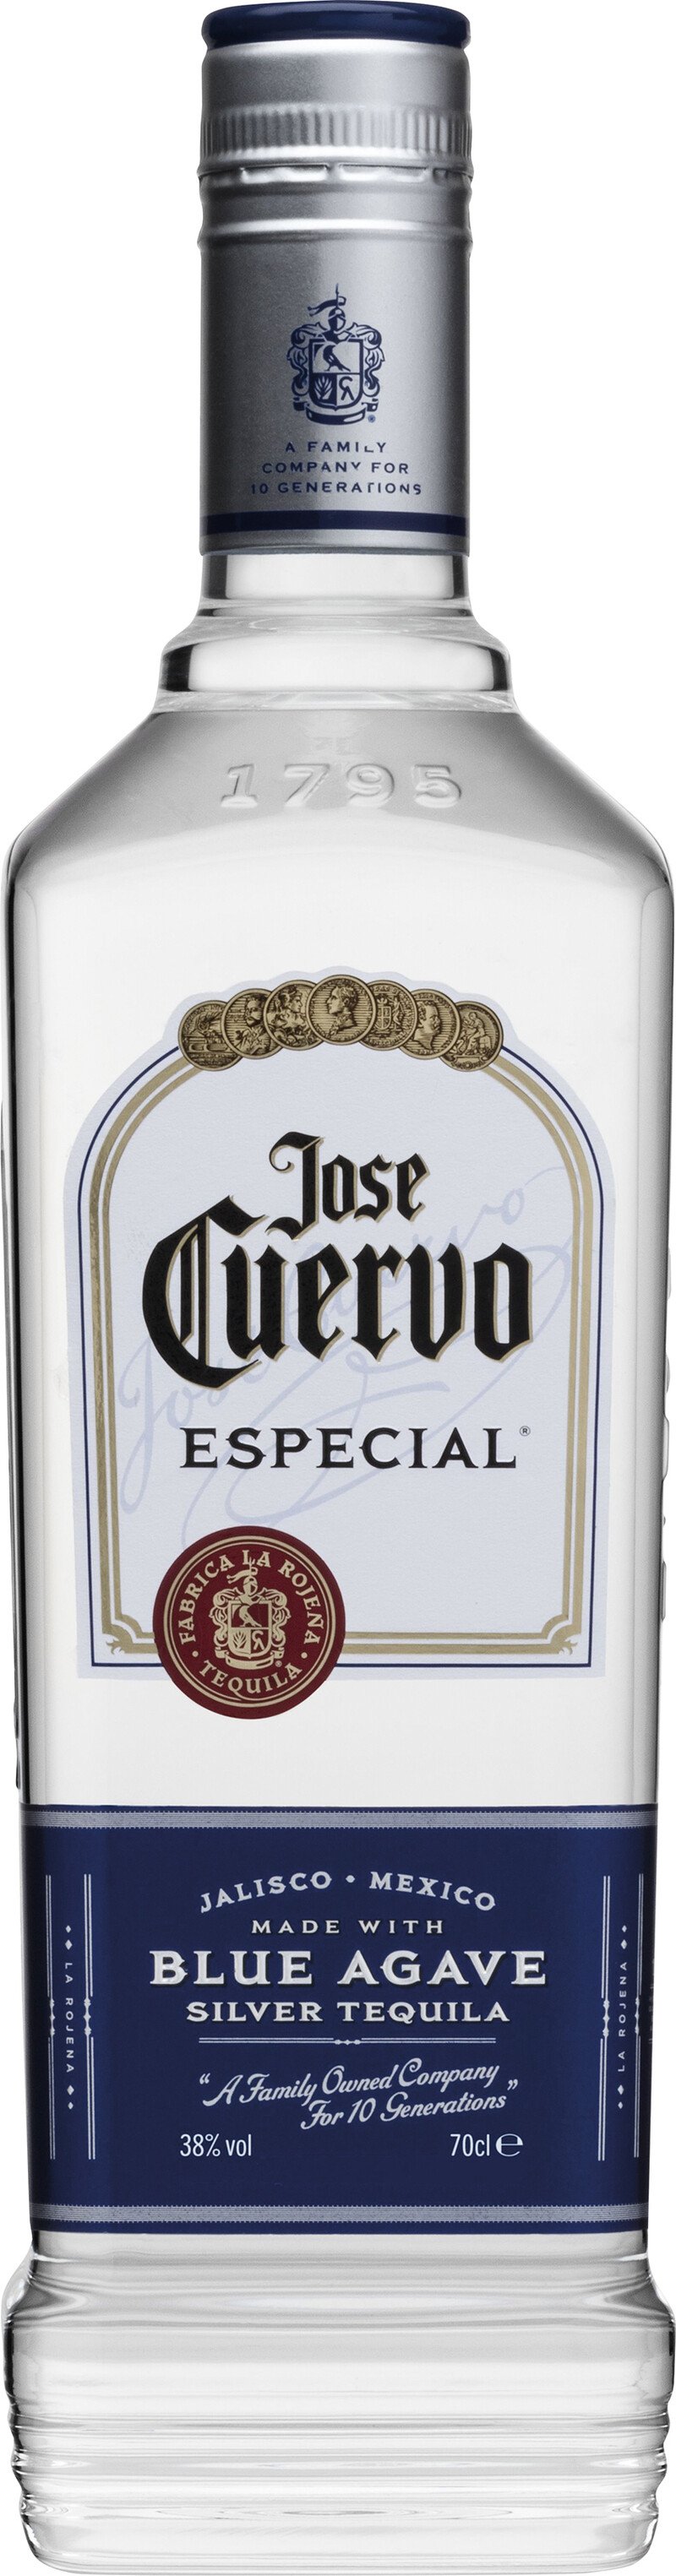 Jose Cuervo silver Fl. (0,7 Lt.)